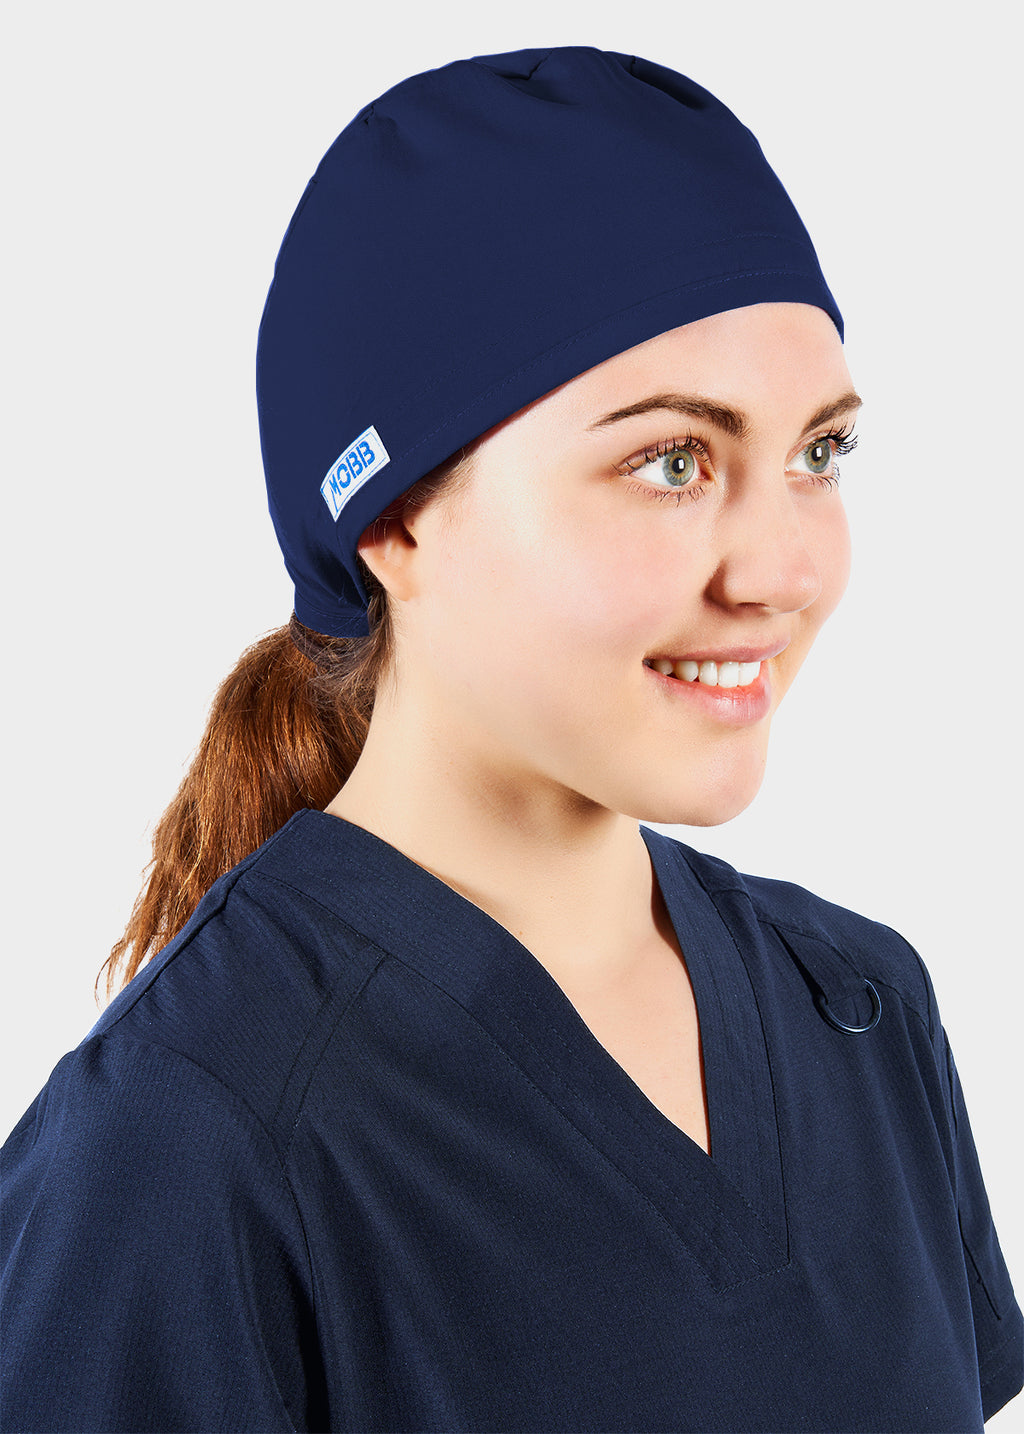 Product - MOBB Surgeon's Cap